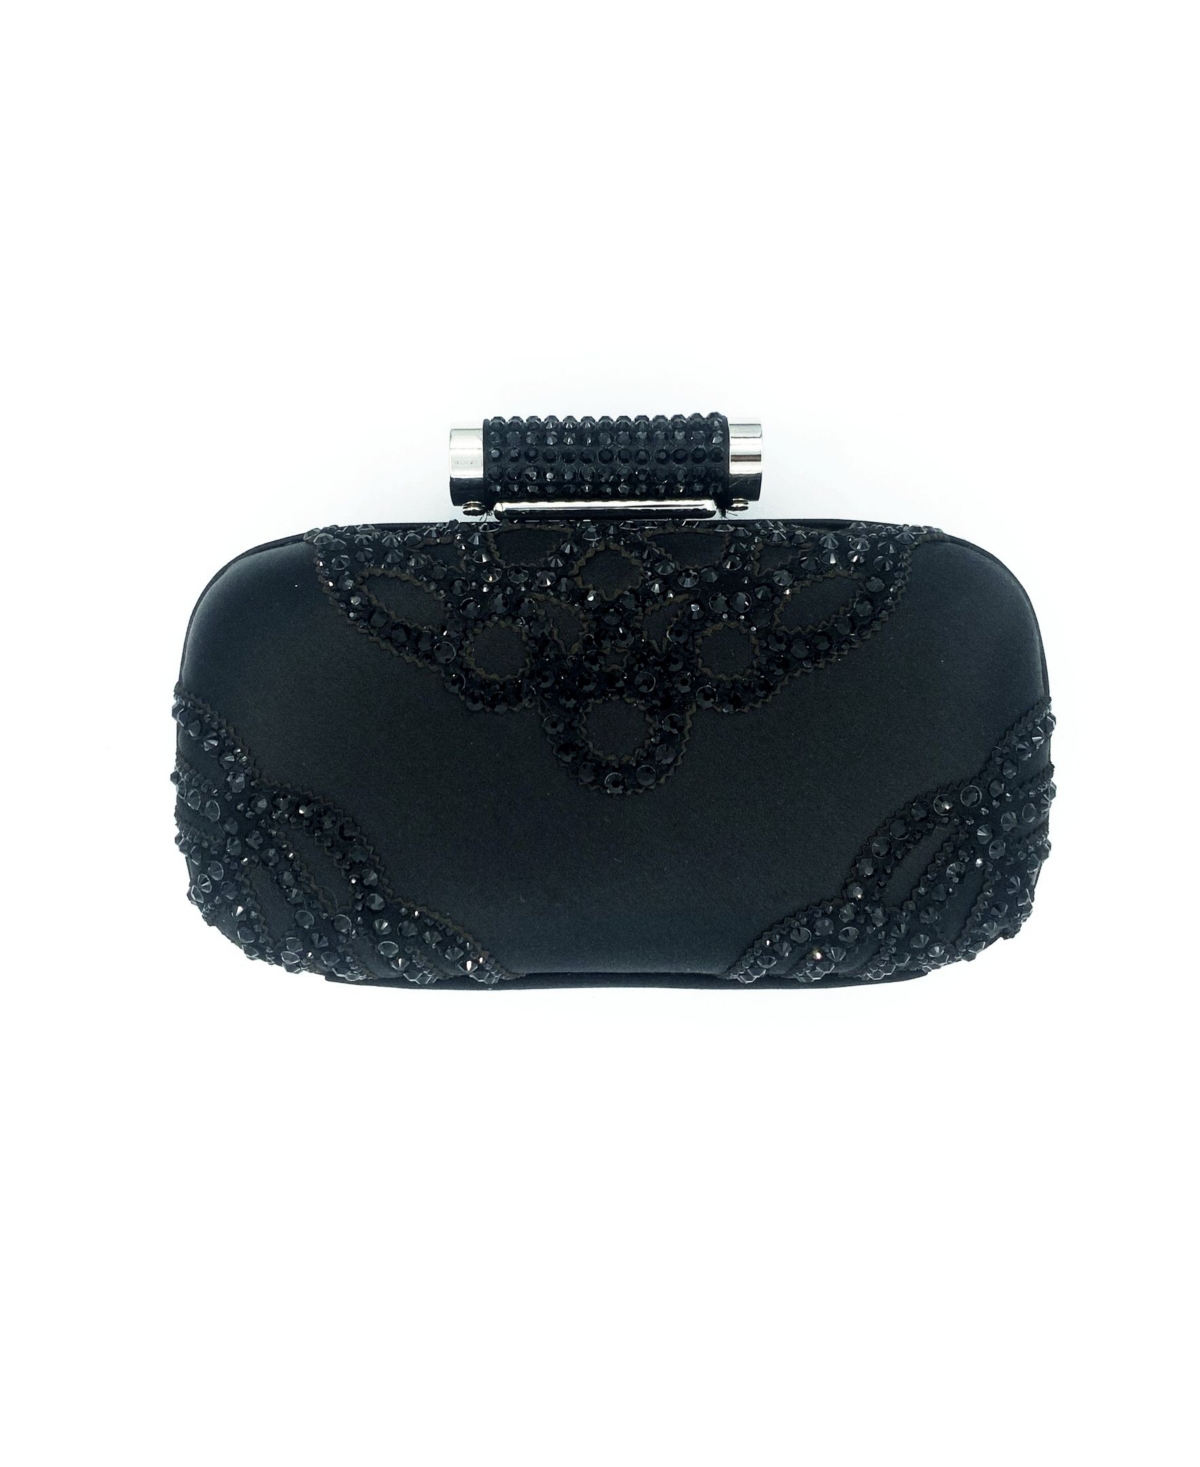 Women's Evening Clap Clutch Handbag - Black